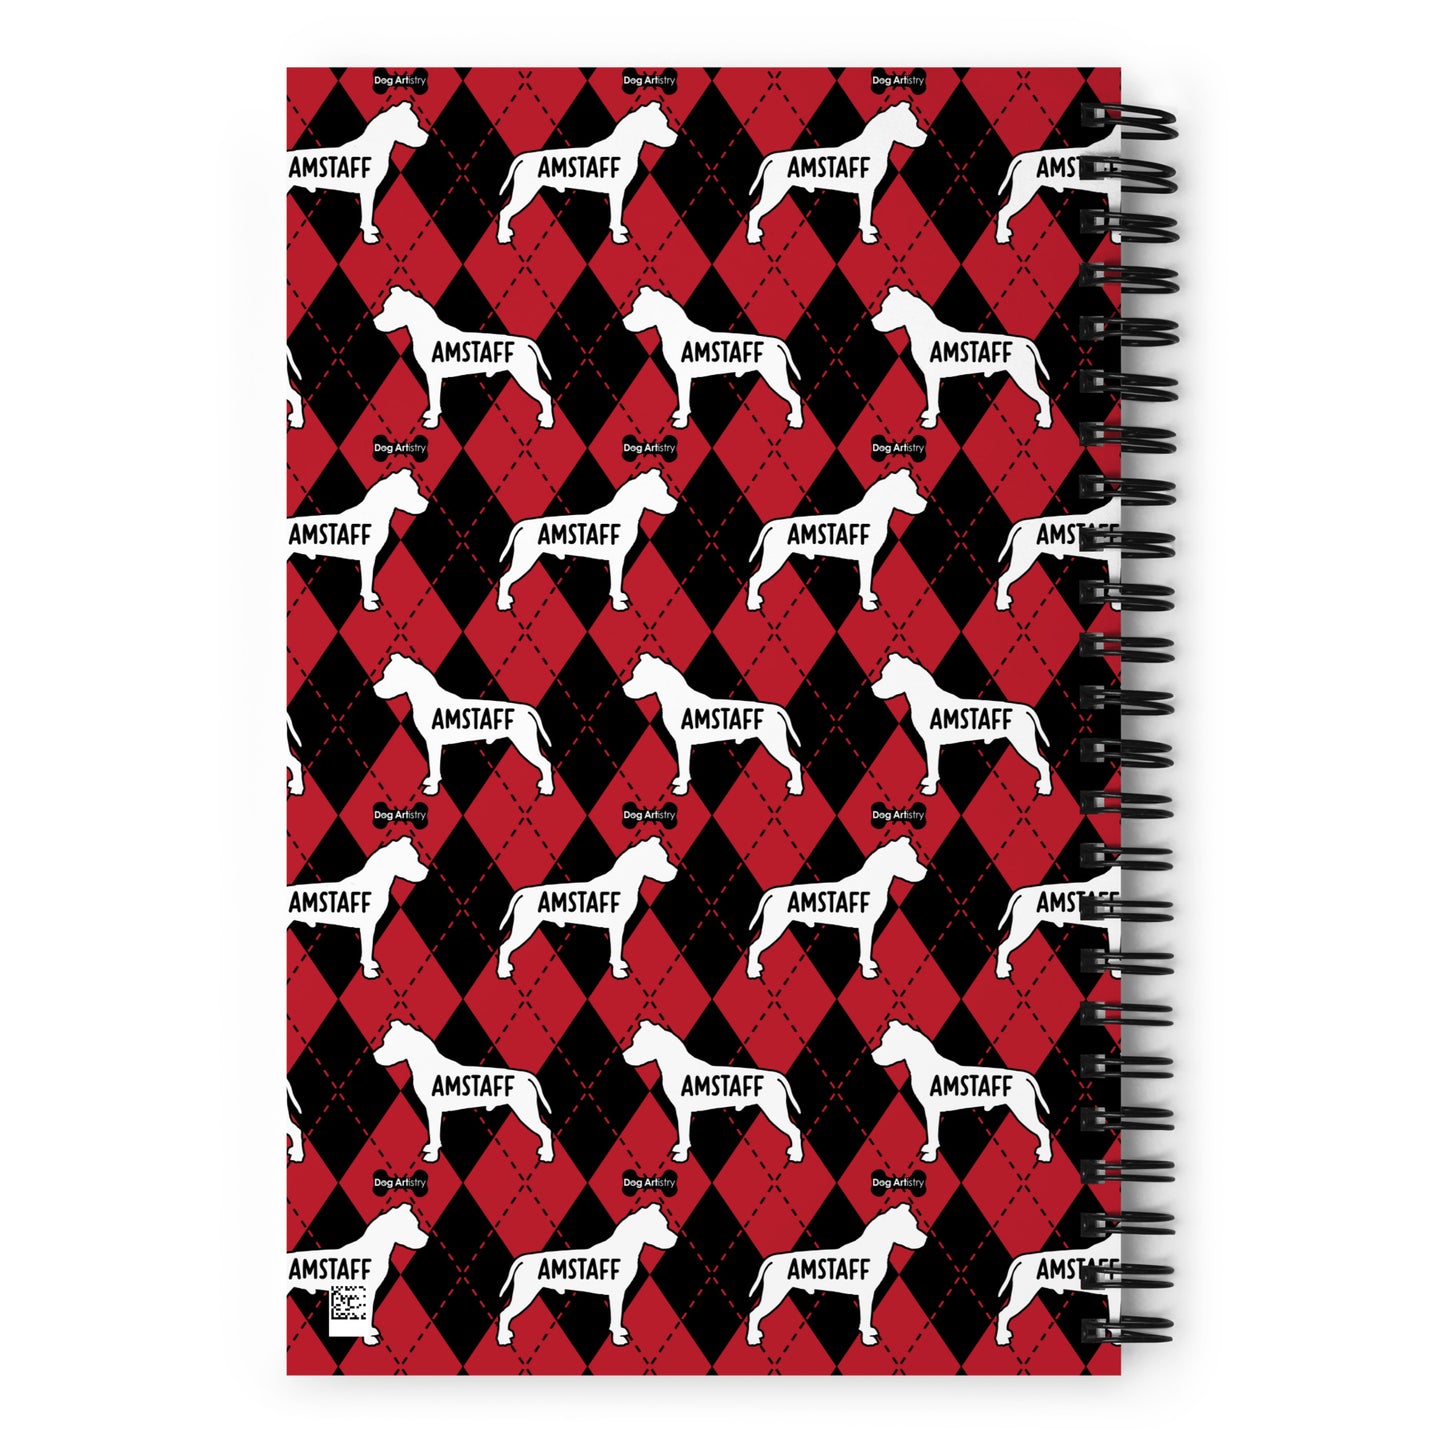 AmStaff Argyle Red and Black Spiral Notebooks